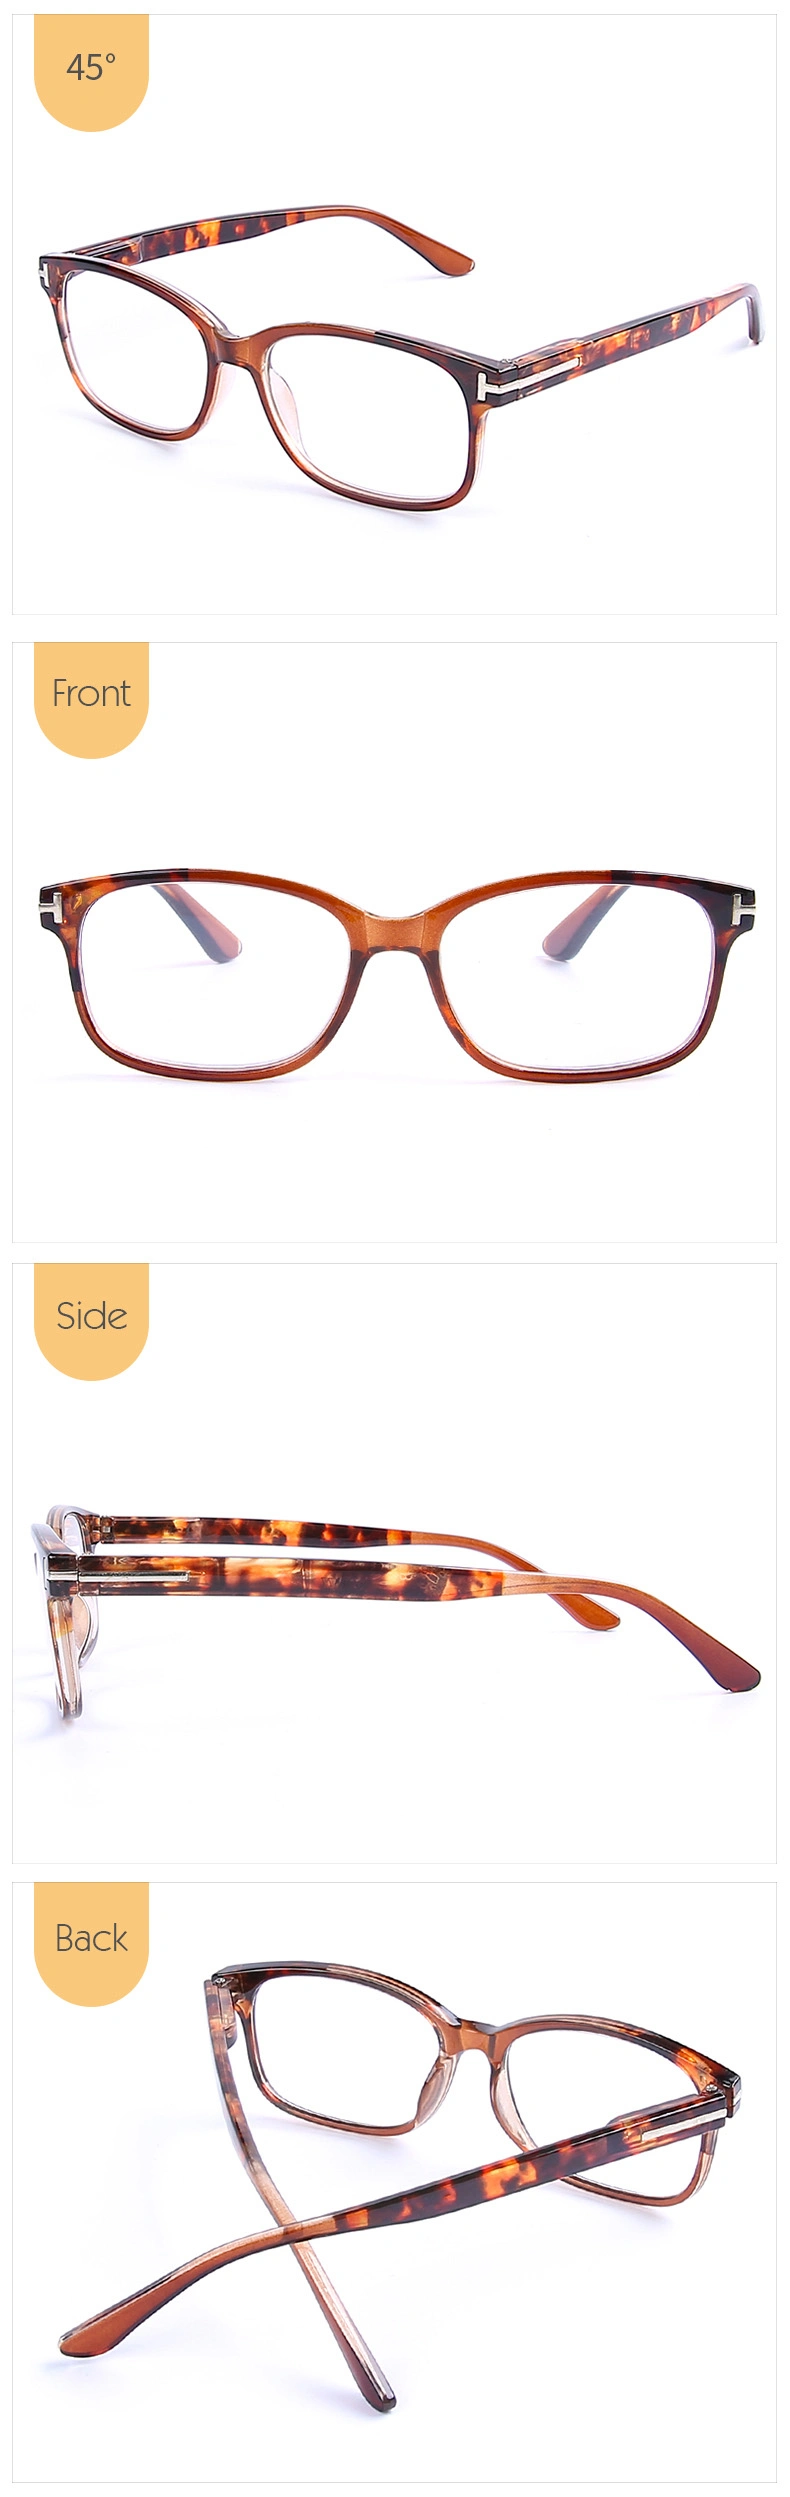 New Fashion Eyewear Mighty Sight Hanging Plastic Reading Glasses